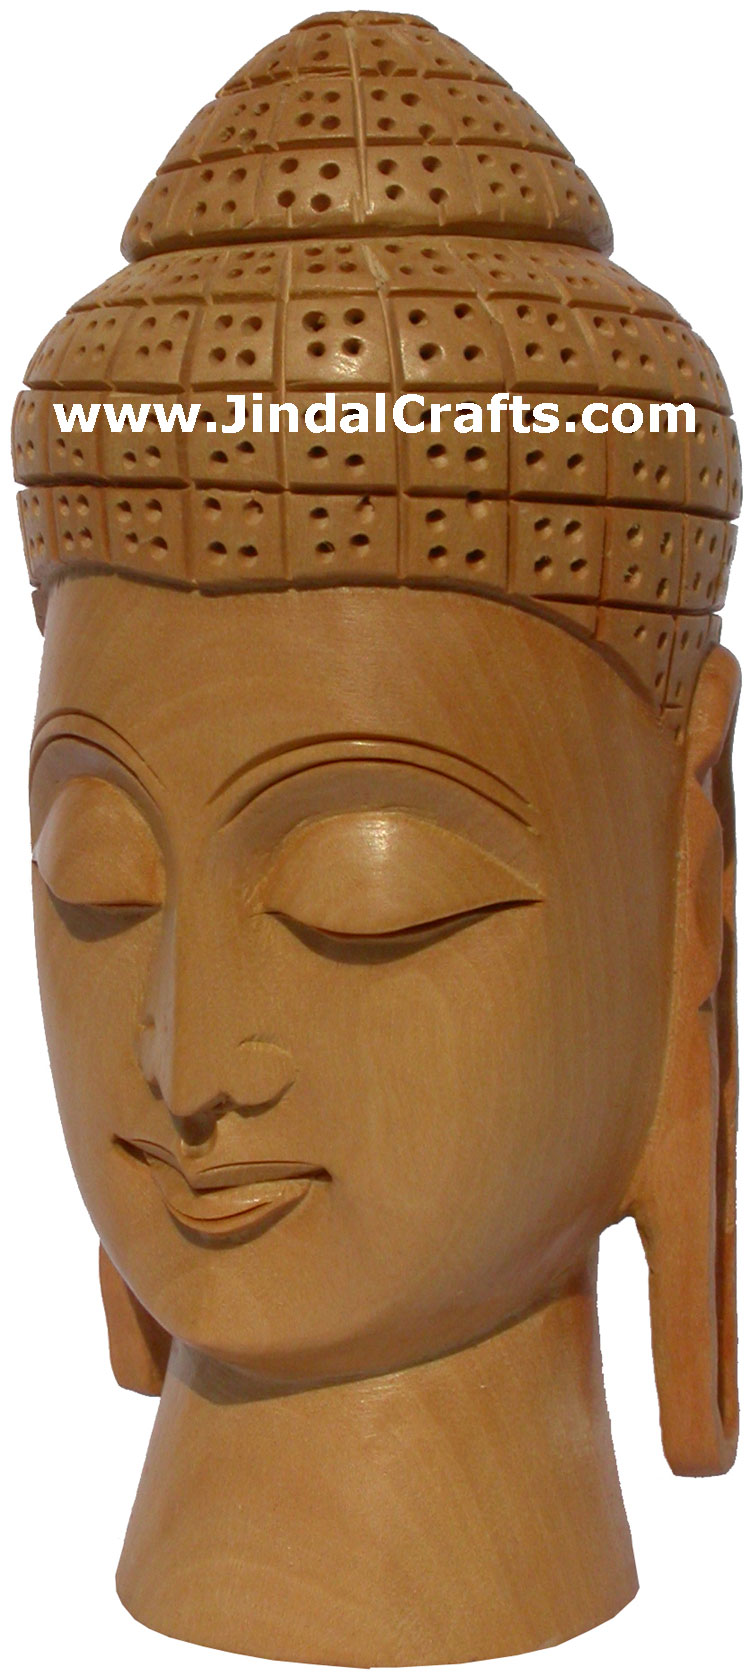 Wood Sculpture Buddha Bust Figurine India Hindu Art Hand Carved Buddhism Crafts